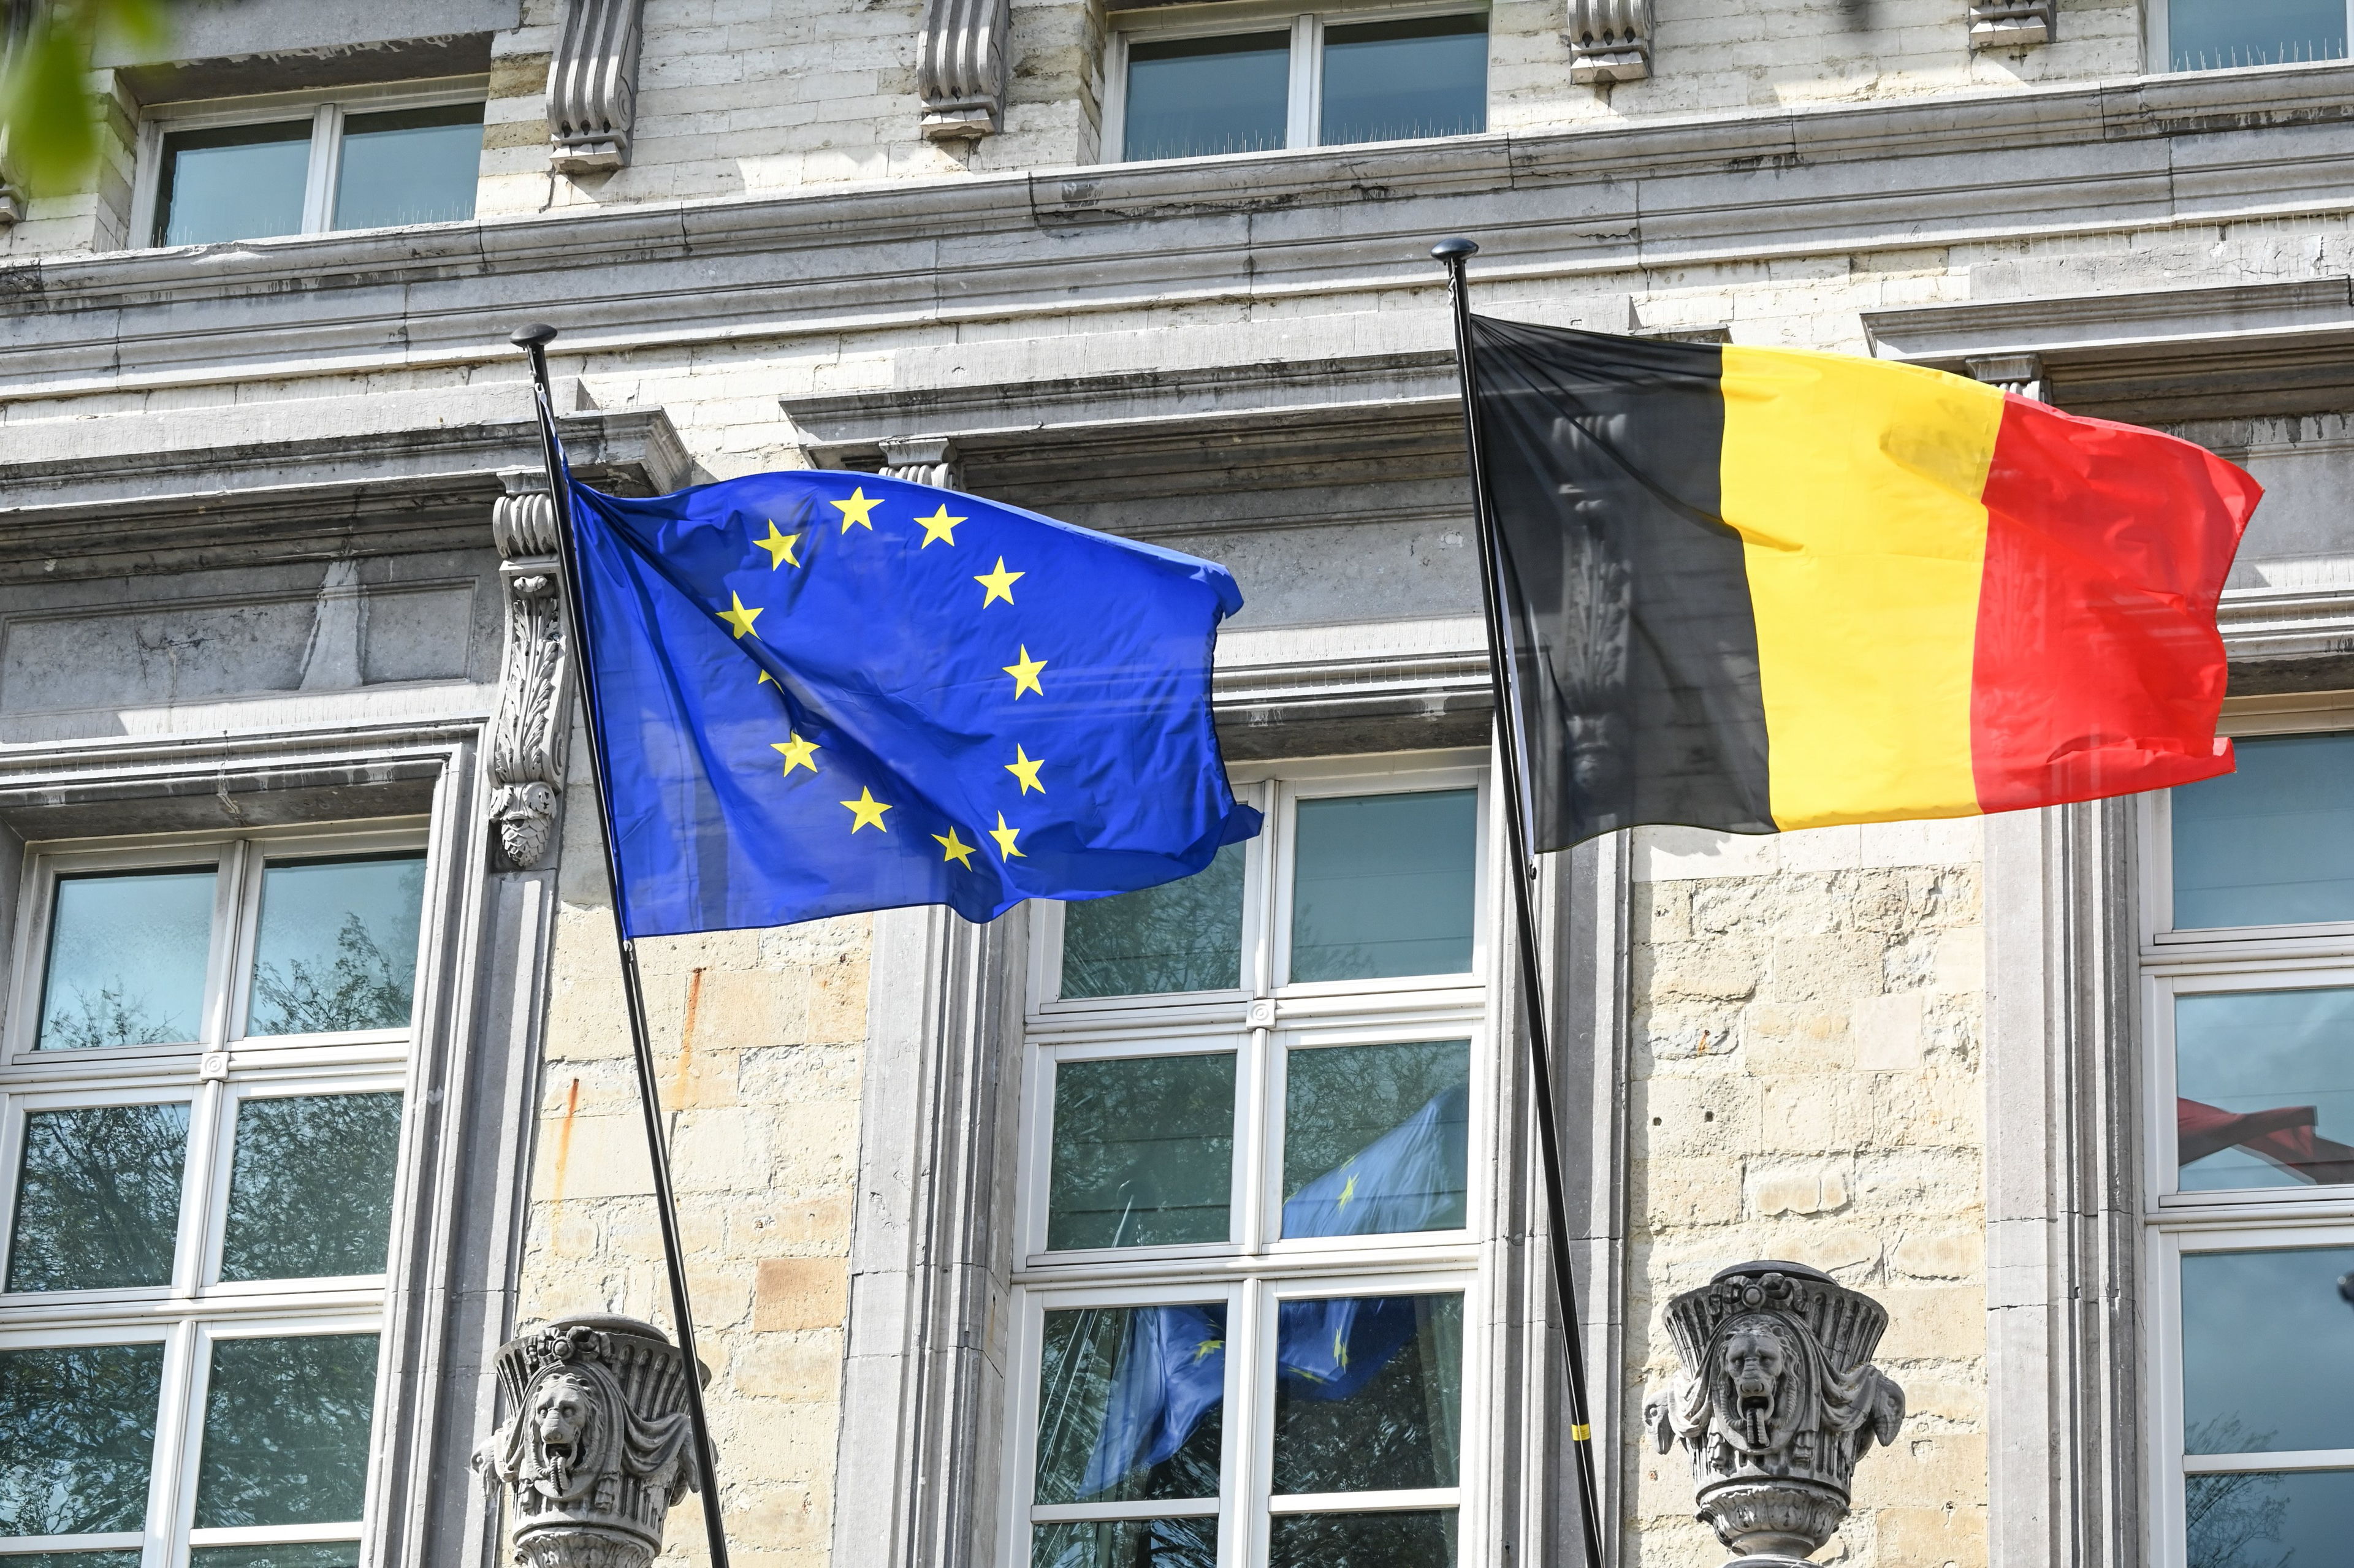 'European Capital of Culture' candidates receive €3 million each